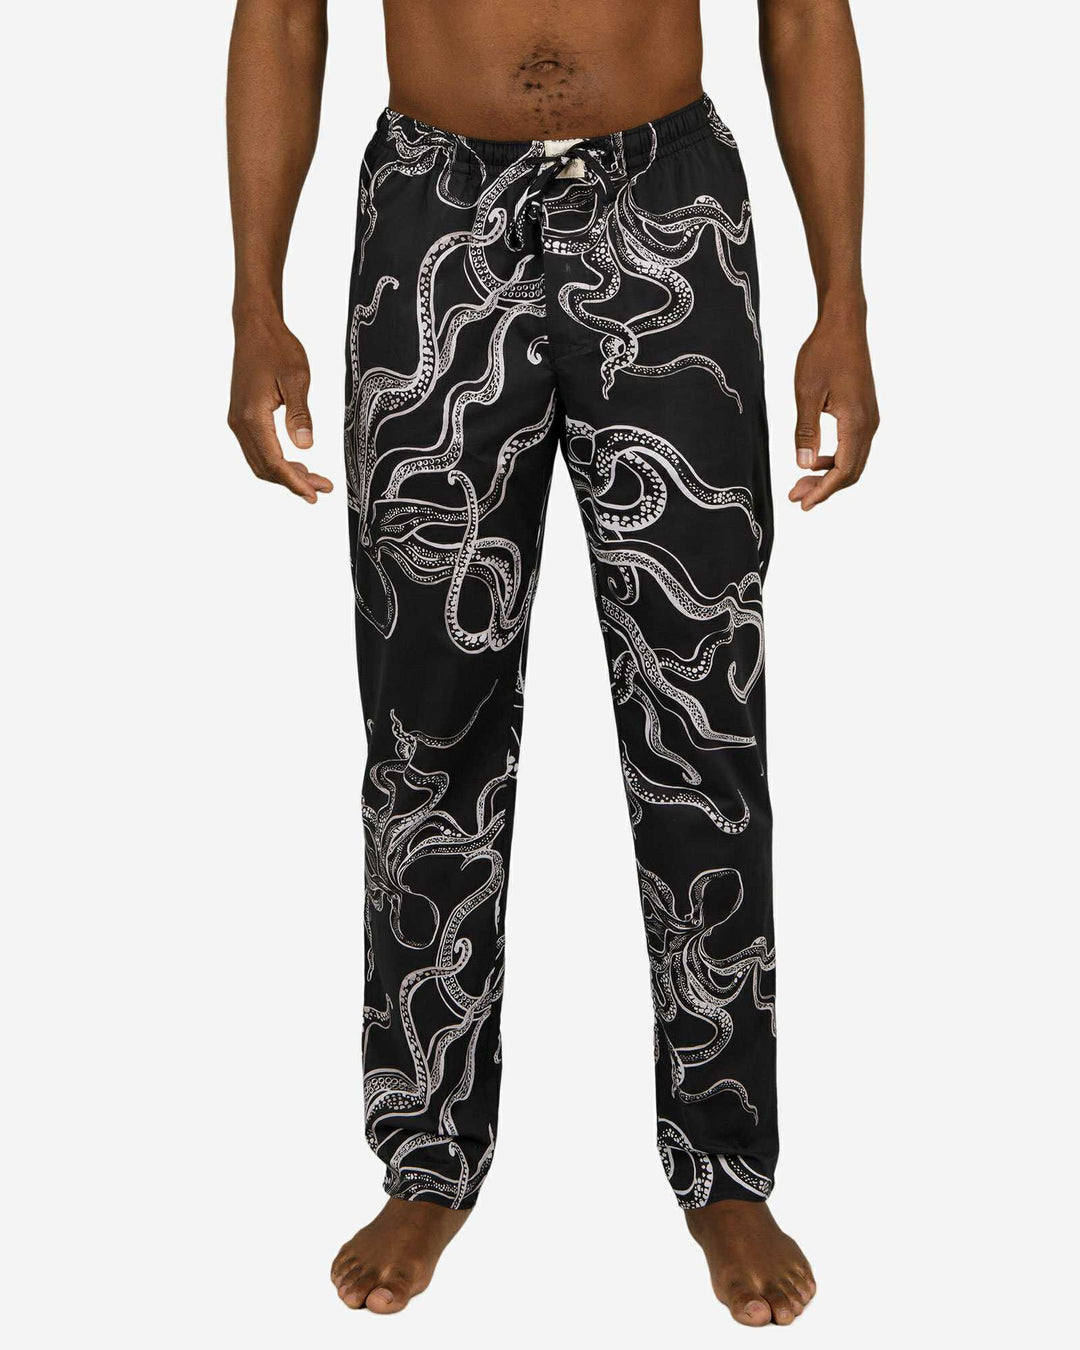 Mens Pyjama Bottoms - white octopuses on a black background